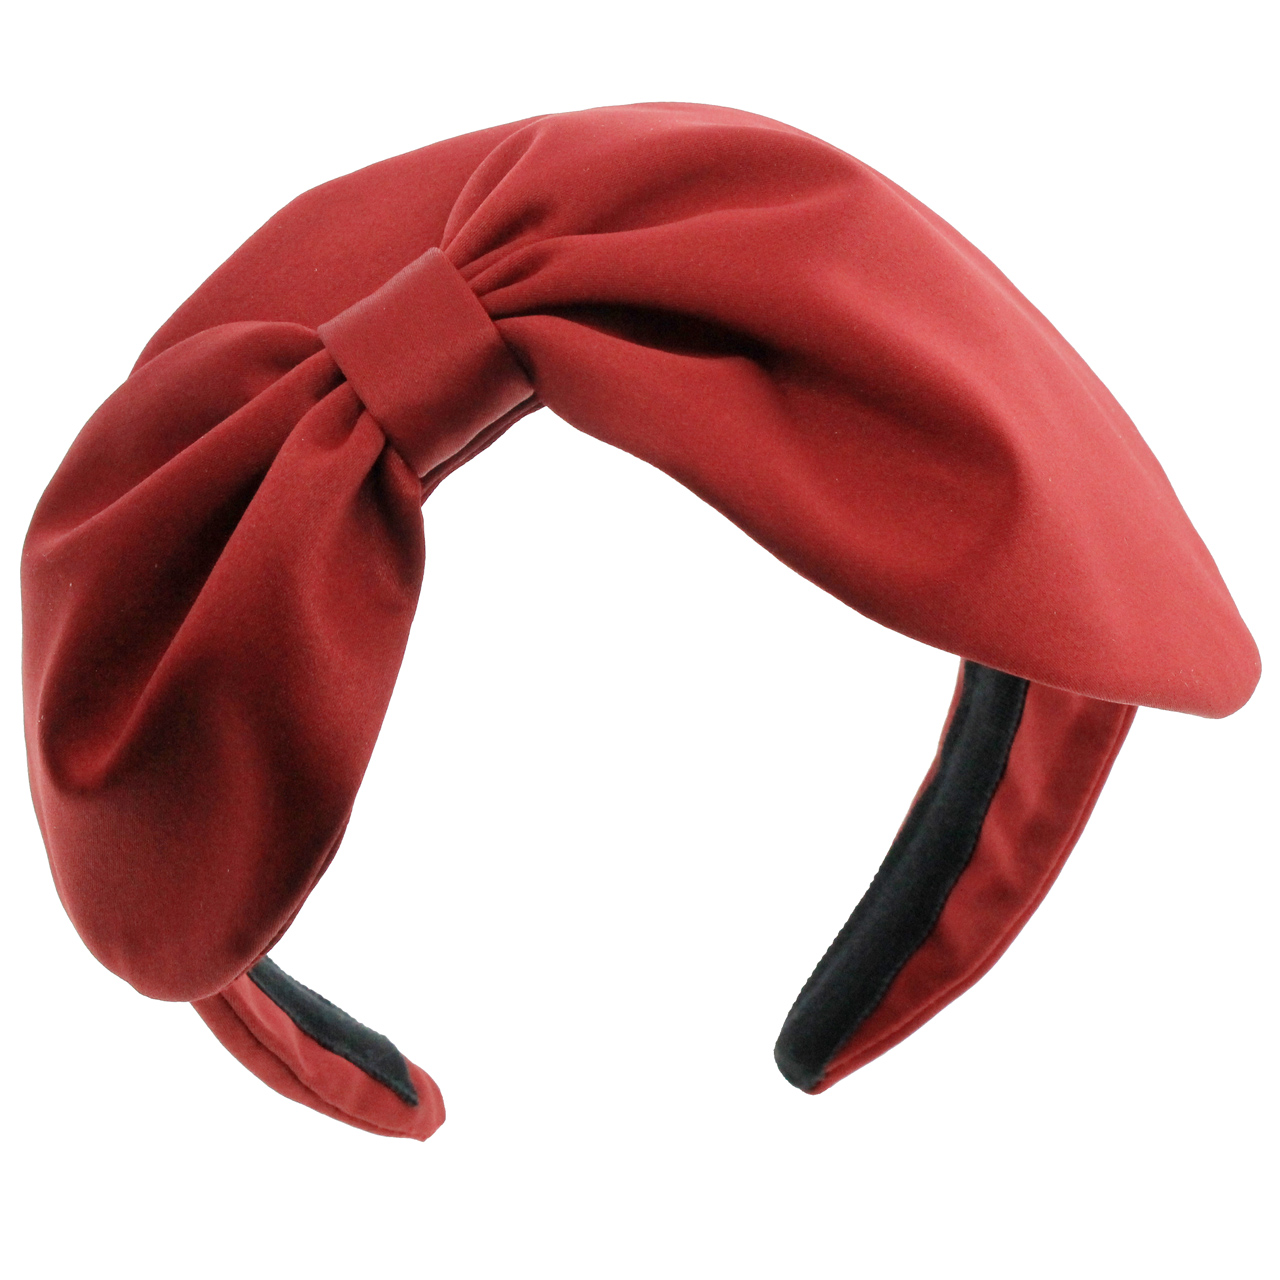 PIllbox Headpiece with Bow - padded headband